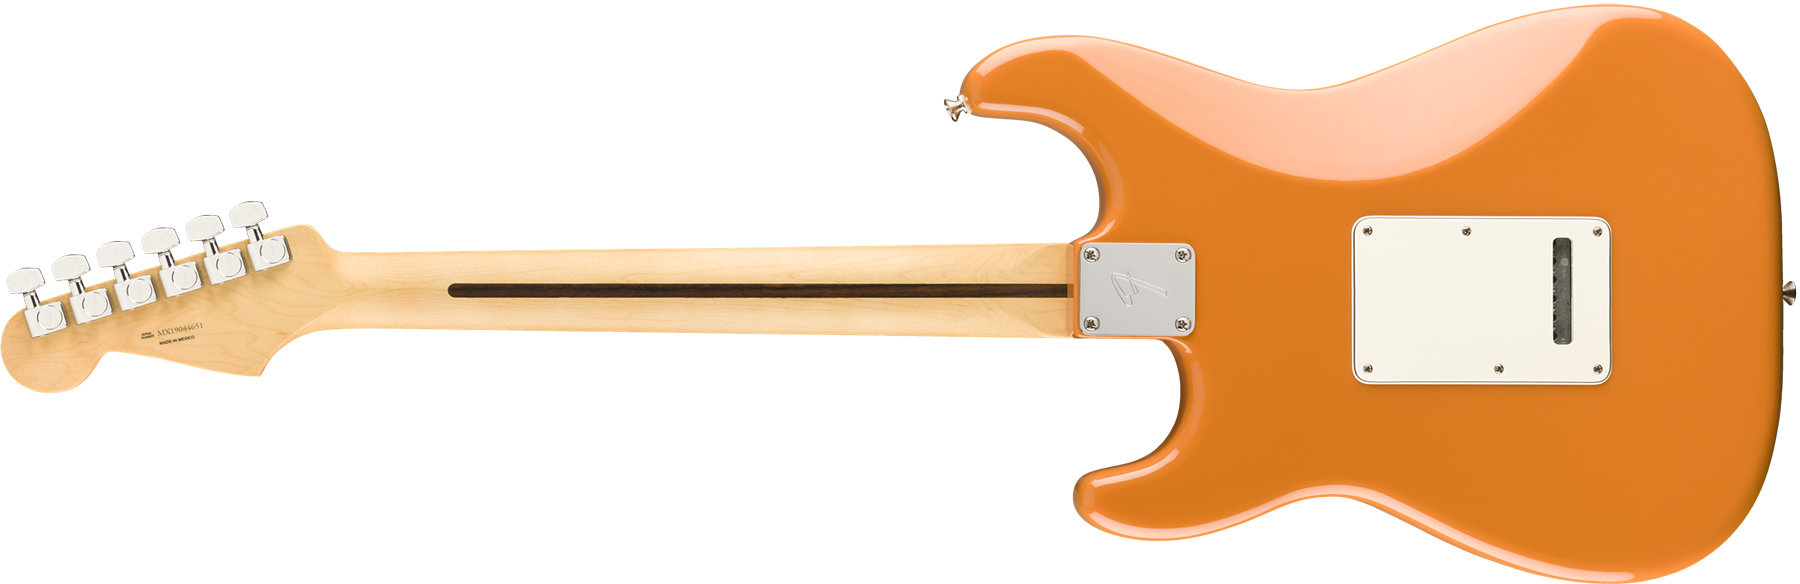 Fender Strat Player Mex Sss Mn - Capri Orange - Guitare Électrique Forme Str - Variation 1